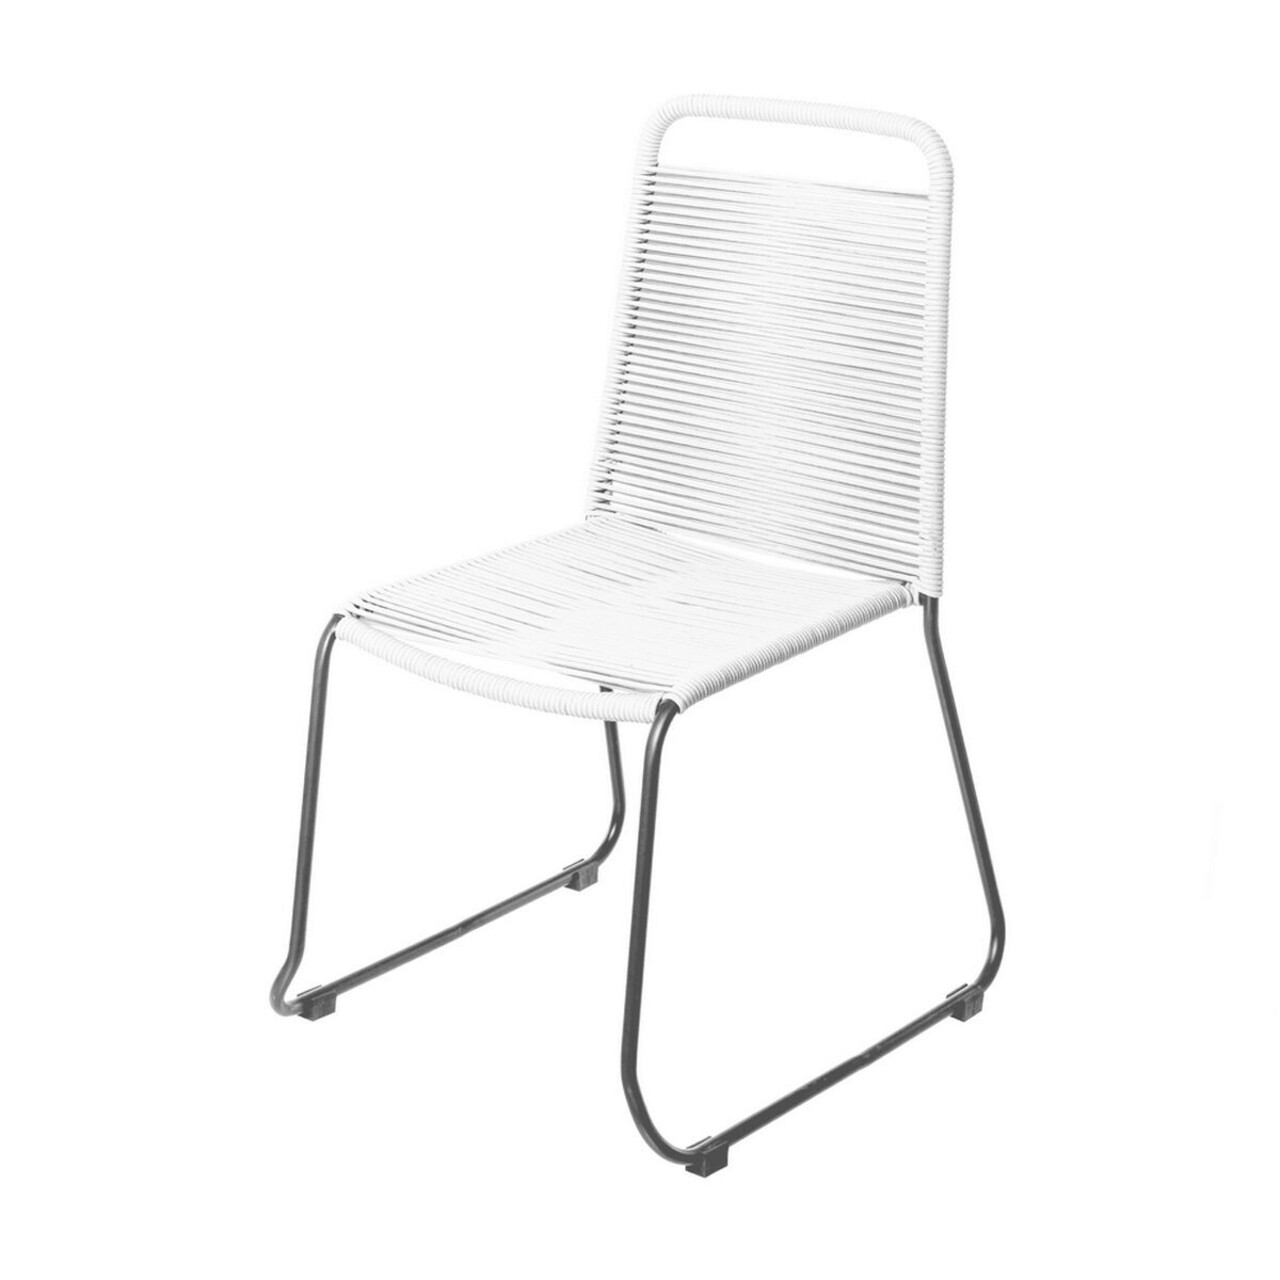 Antea Dark Legs Kerti szék, 53 x 53 x 88 cm, acél/madzag, fehér